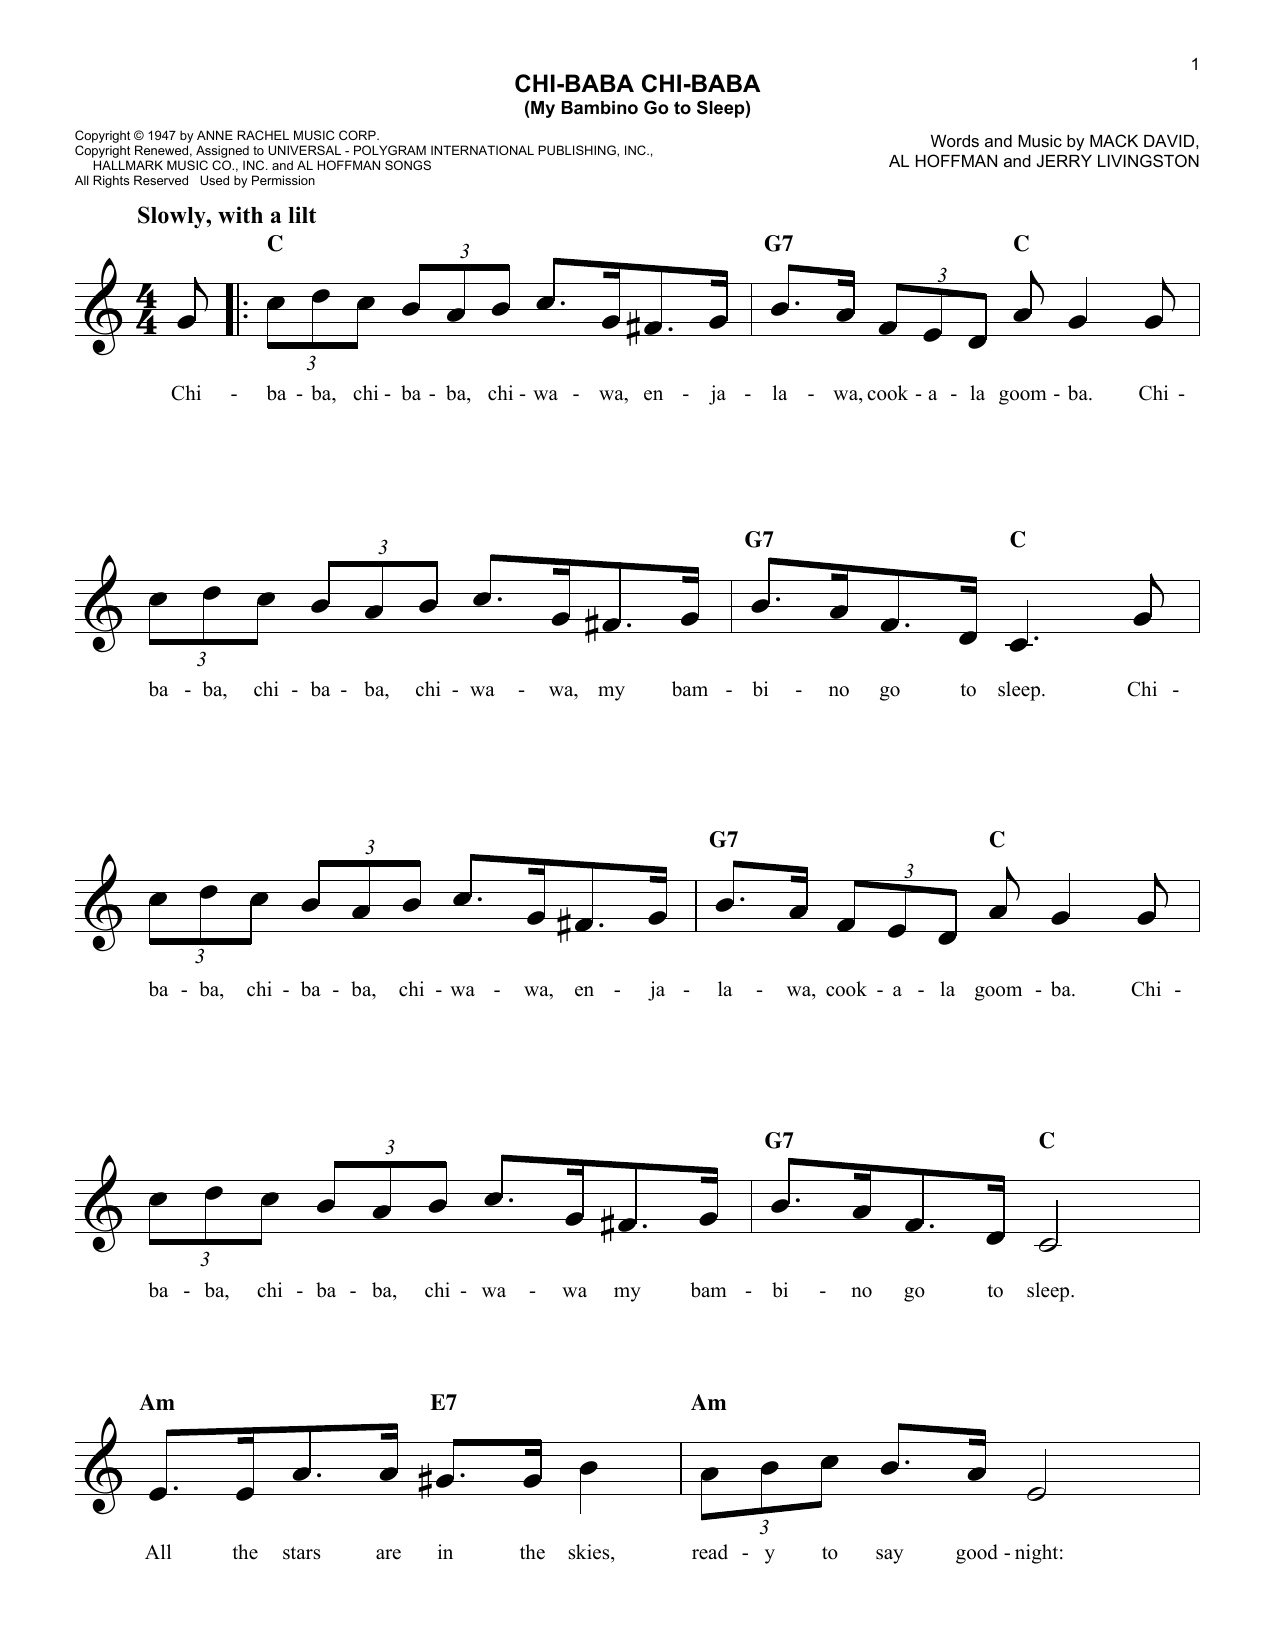 Mack David Chi-Baba Chi-Baba (My Bambino Go To Sleep) sheet music notes and chords arranged for Lead Sheet / Fake Book